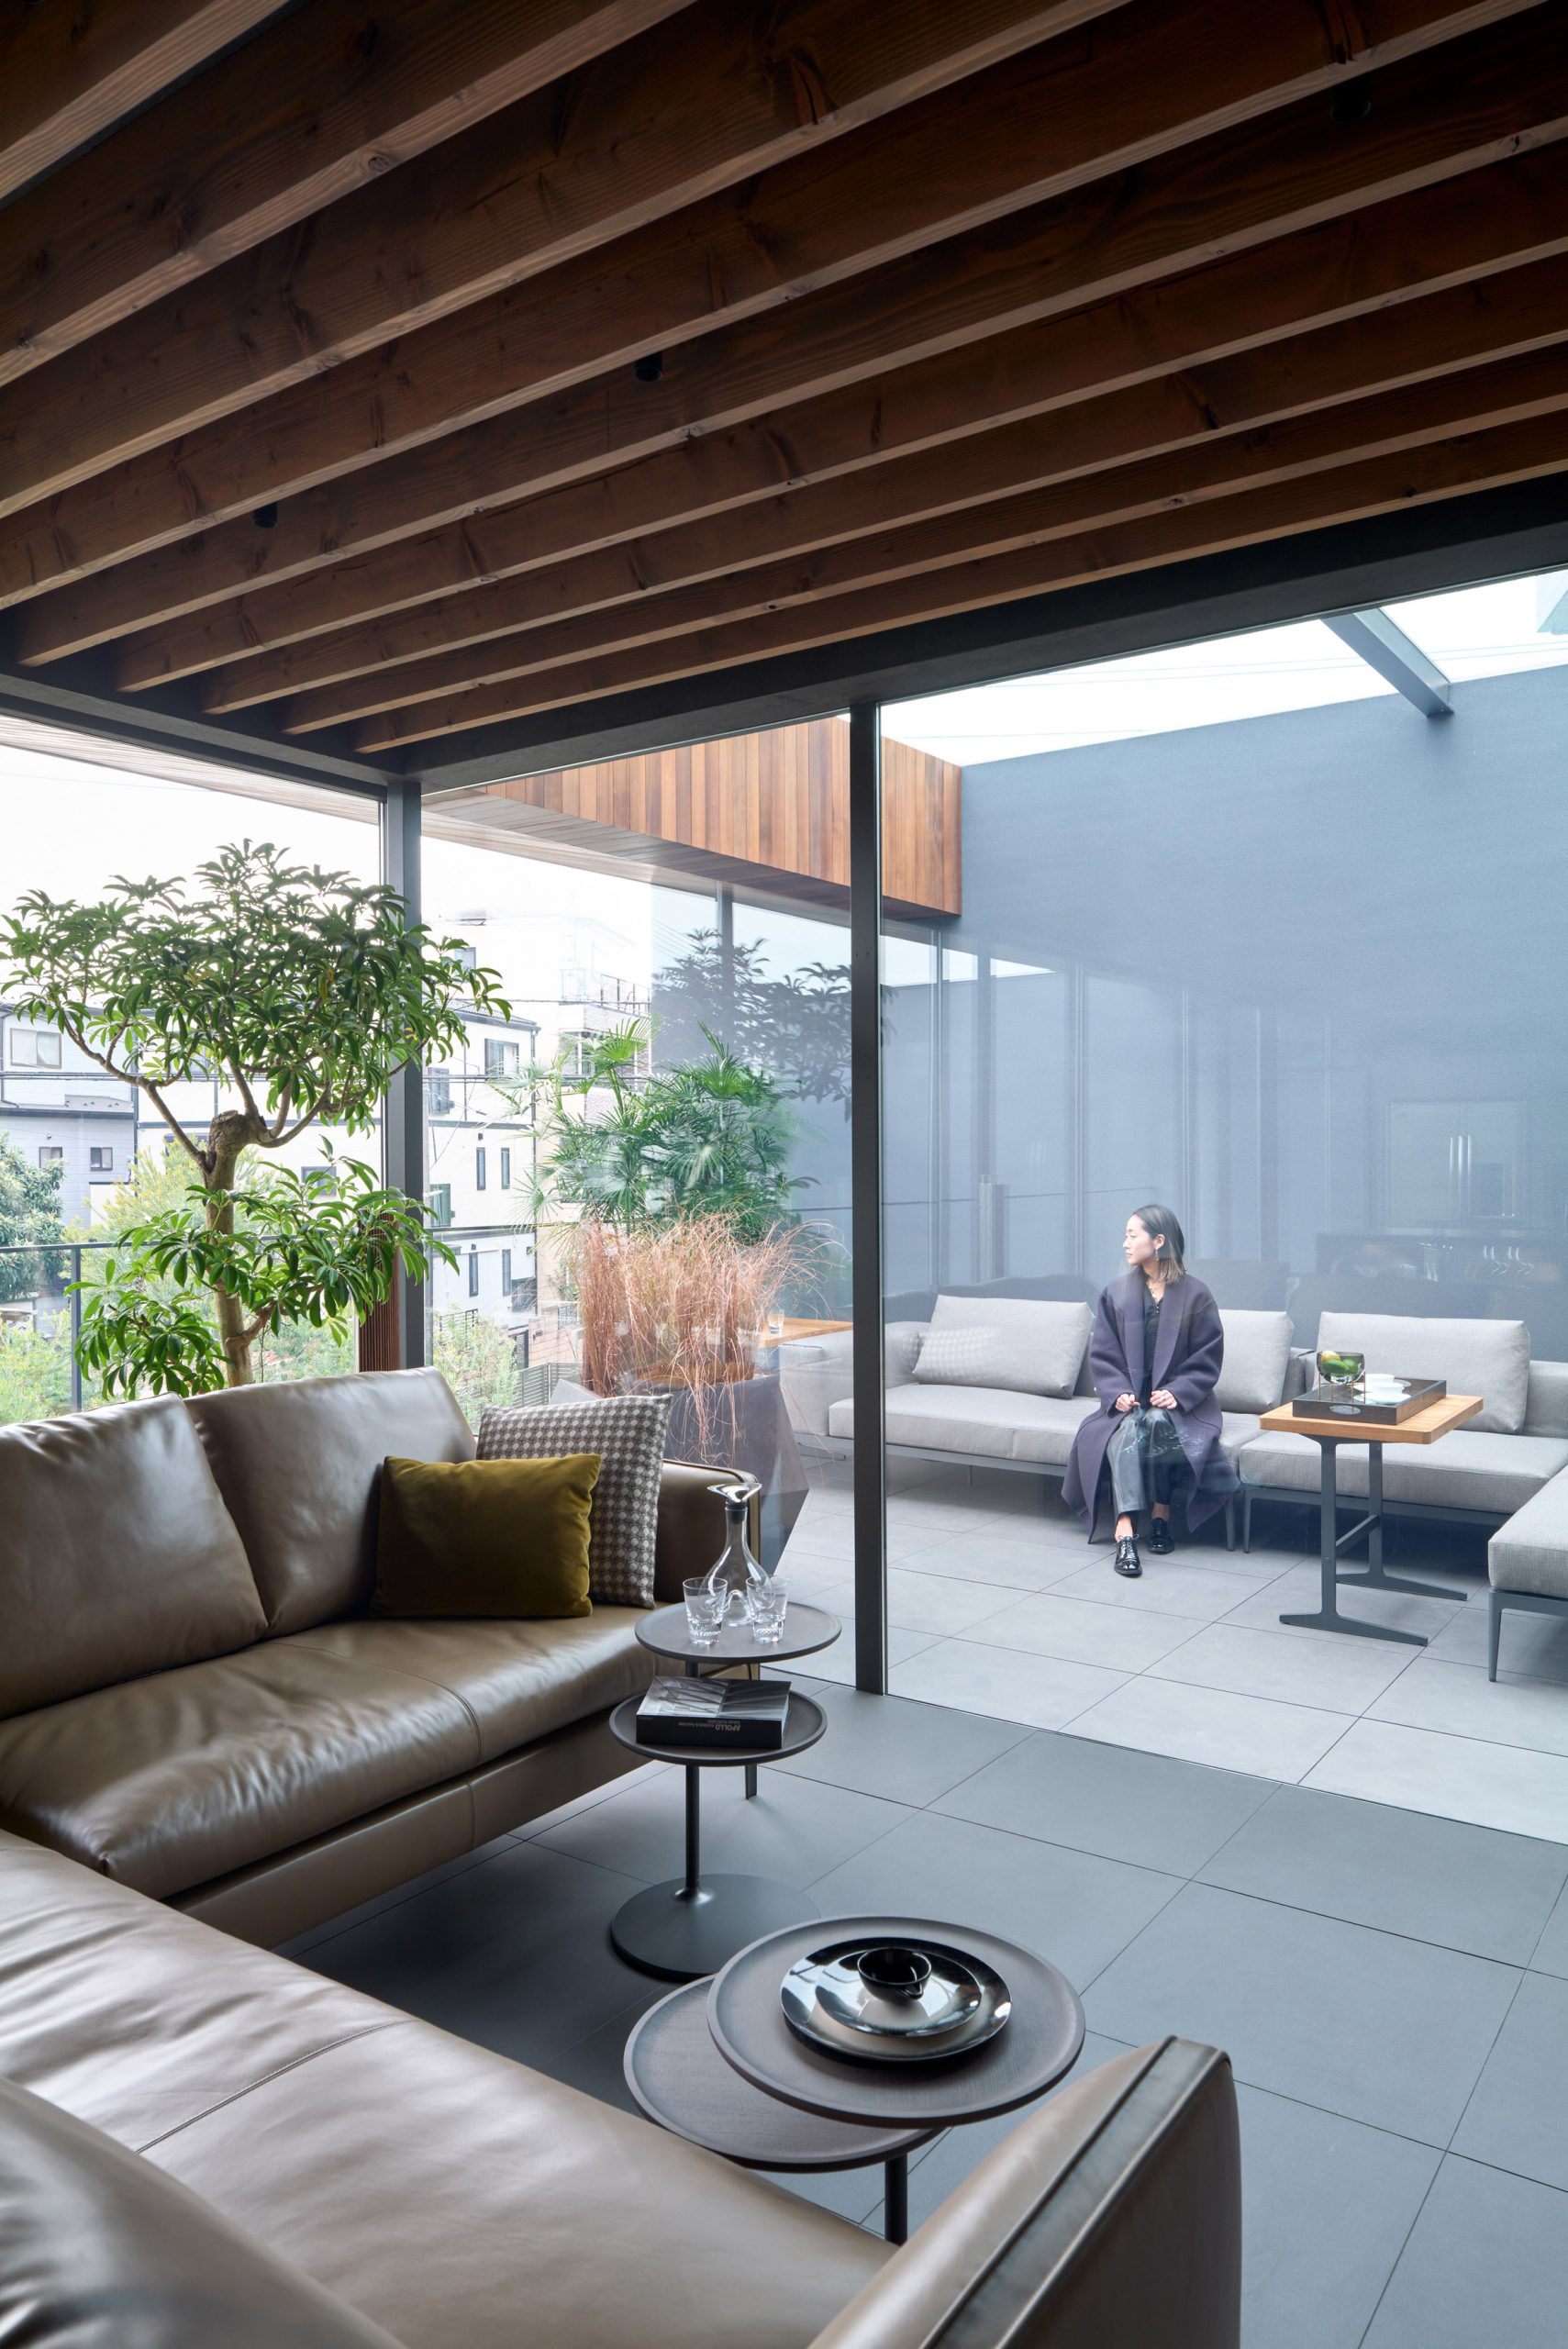 Tiled flooring runs through the interior and exterior by Apollo Architects & Associates